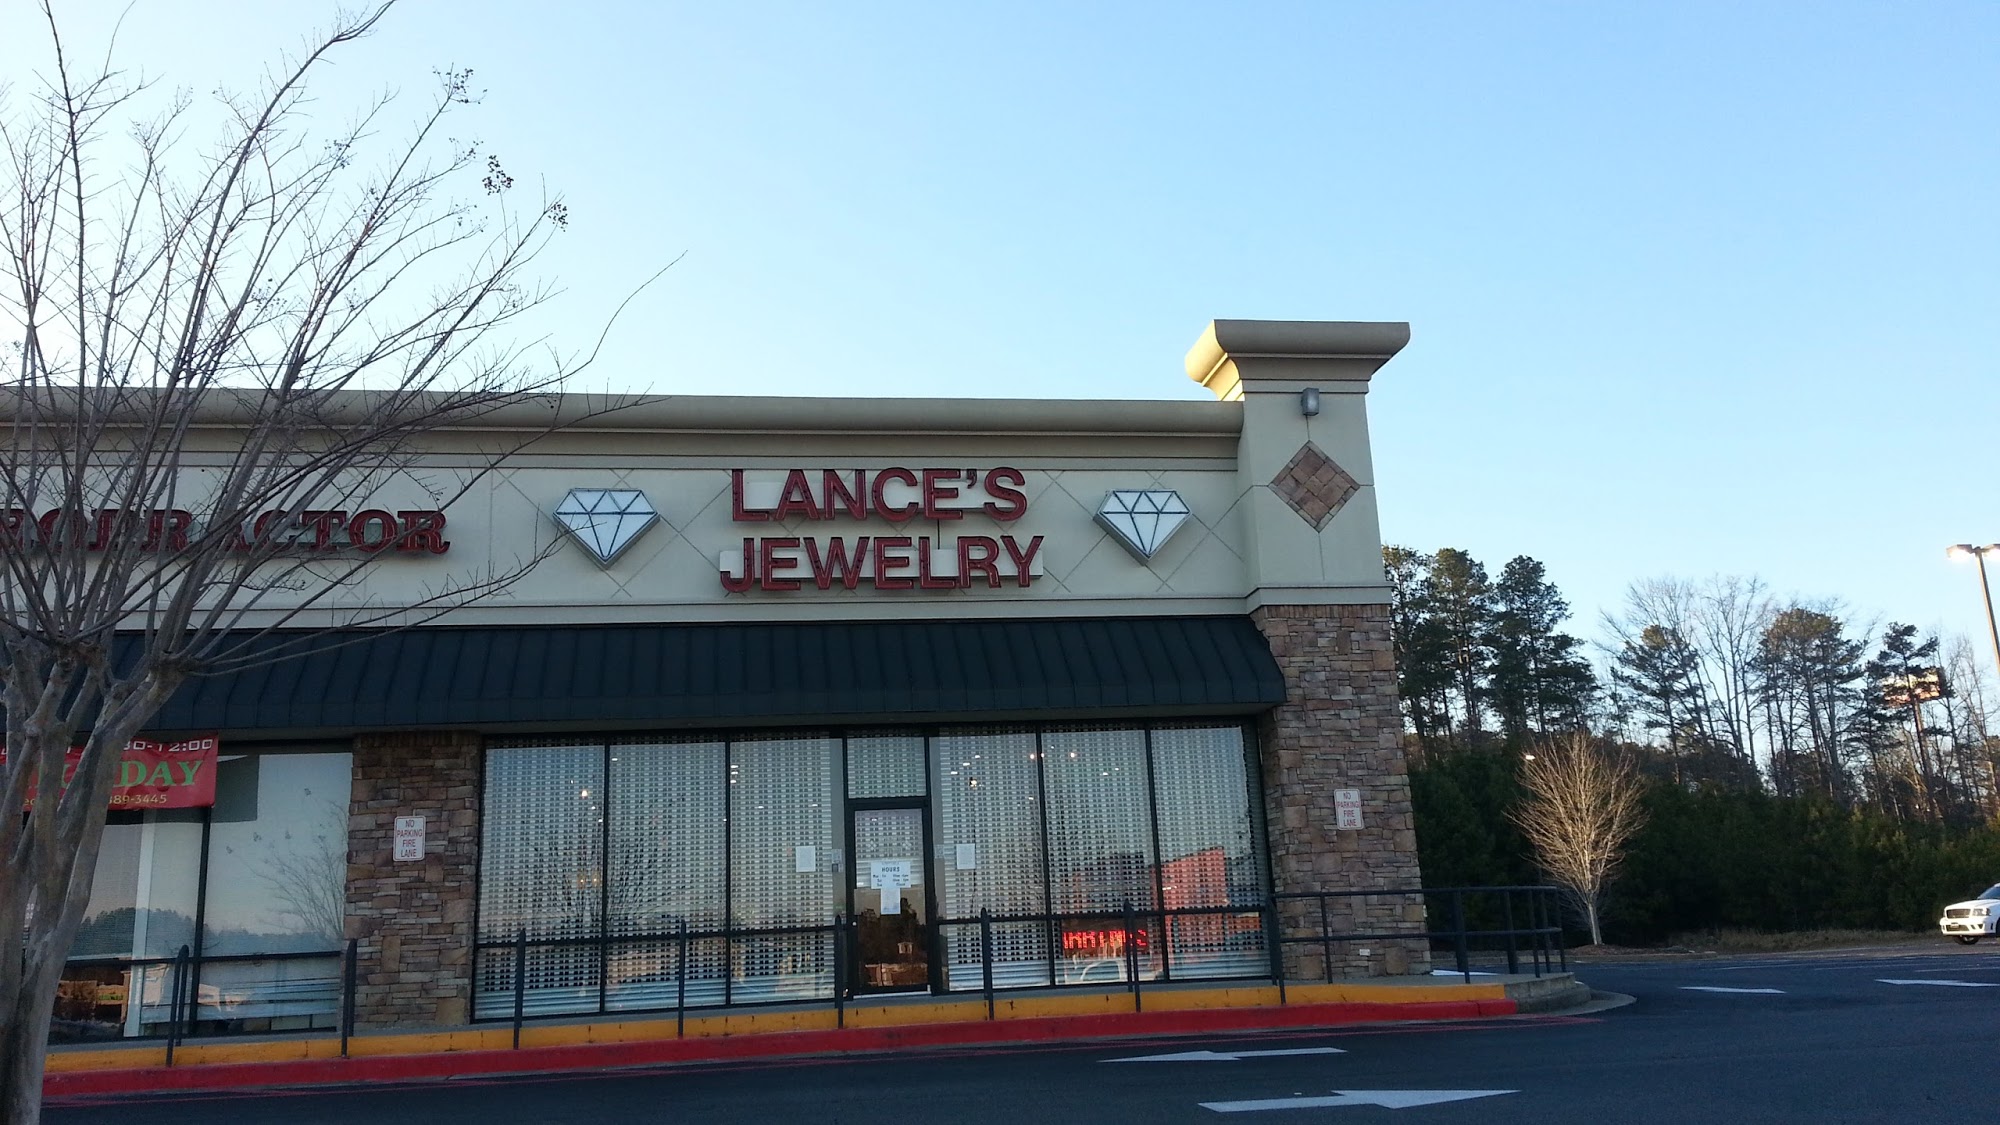 Lance's Jewelry